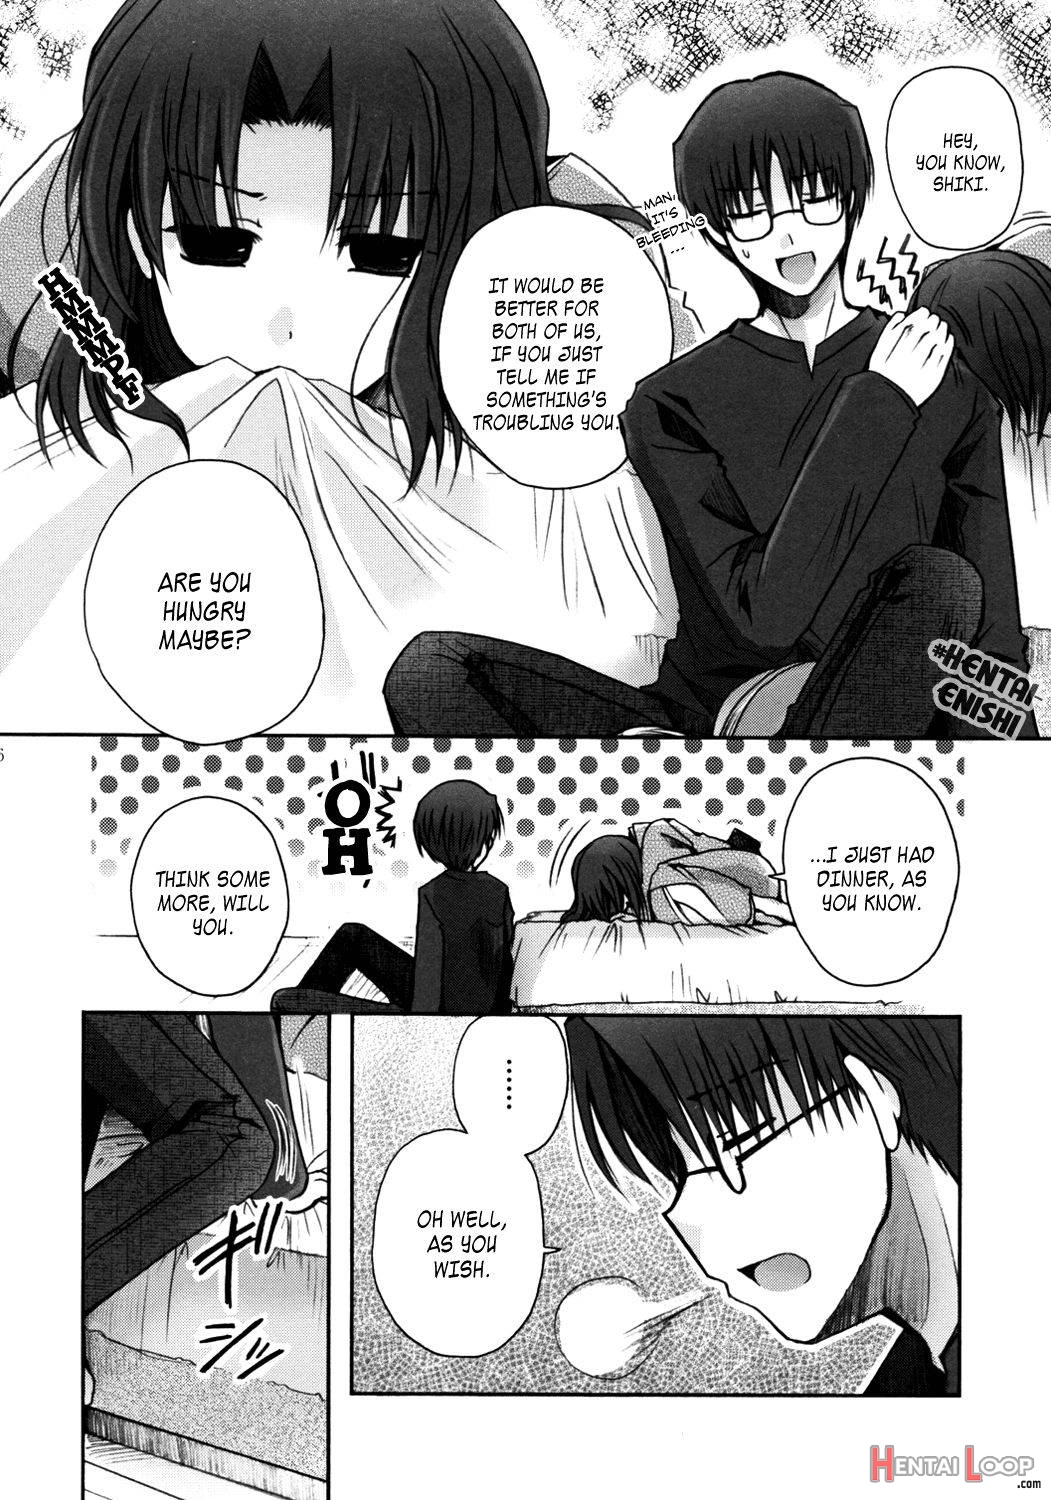 Mitsuyume page 3